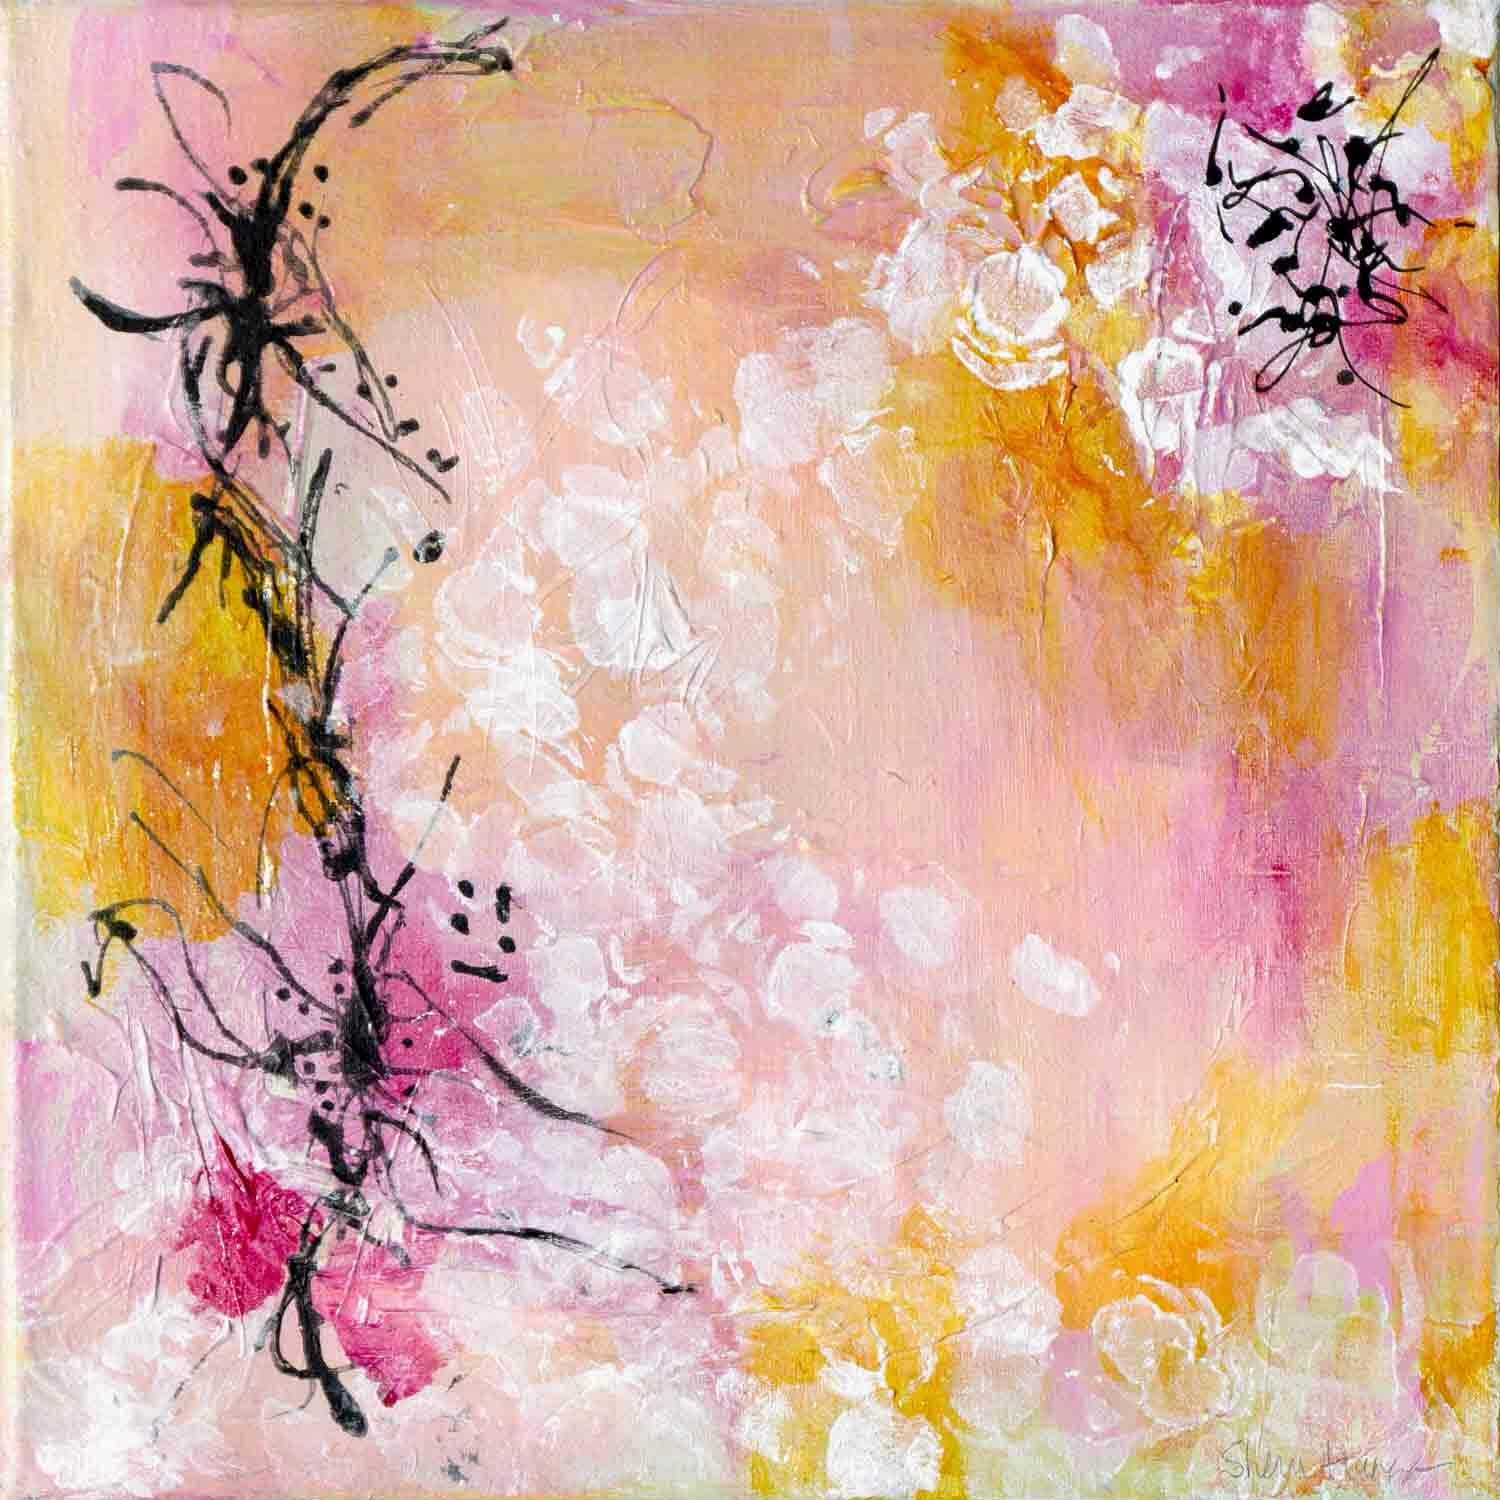 Cherry Blossom Spring
12&rdquo; x 12&rdquo;
Acrylic on canvas